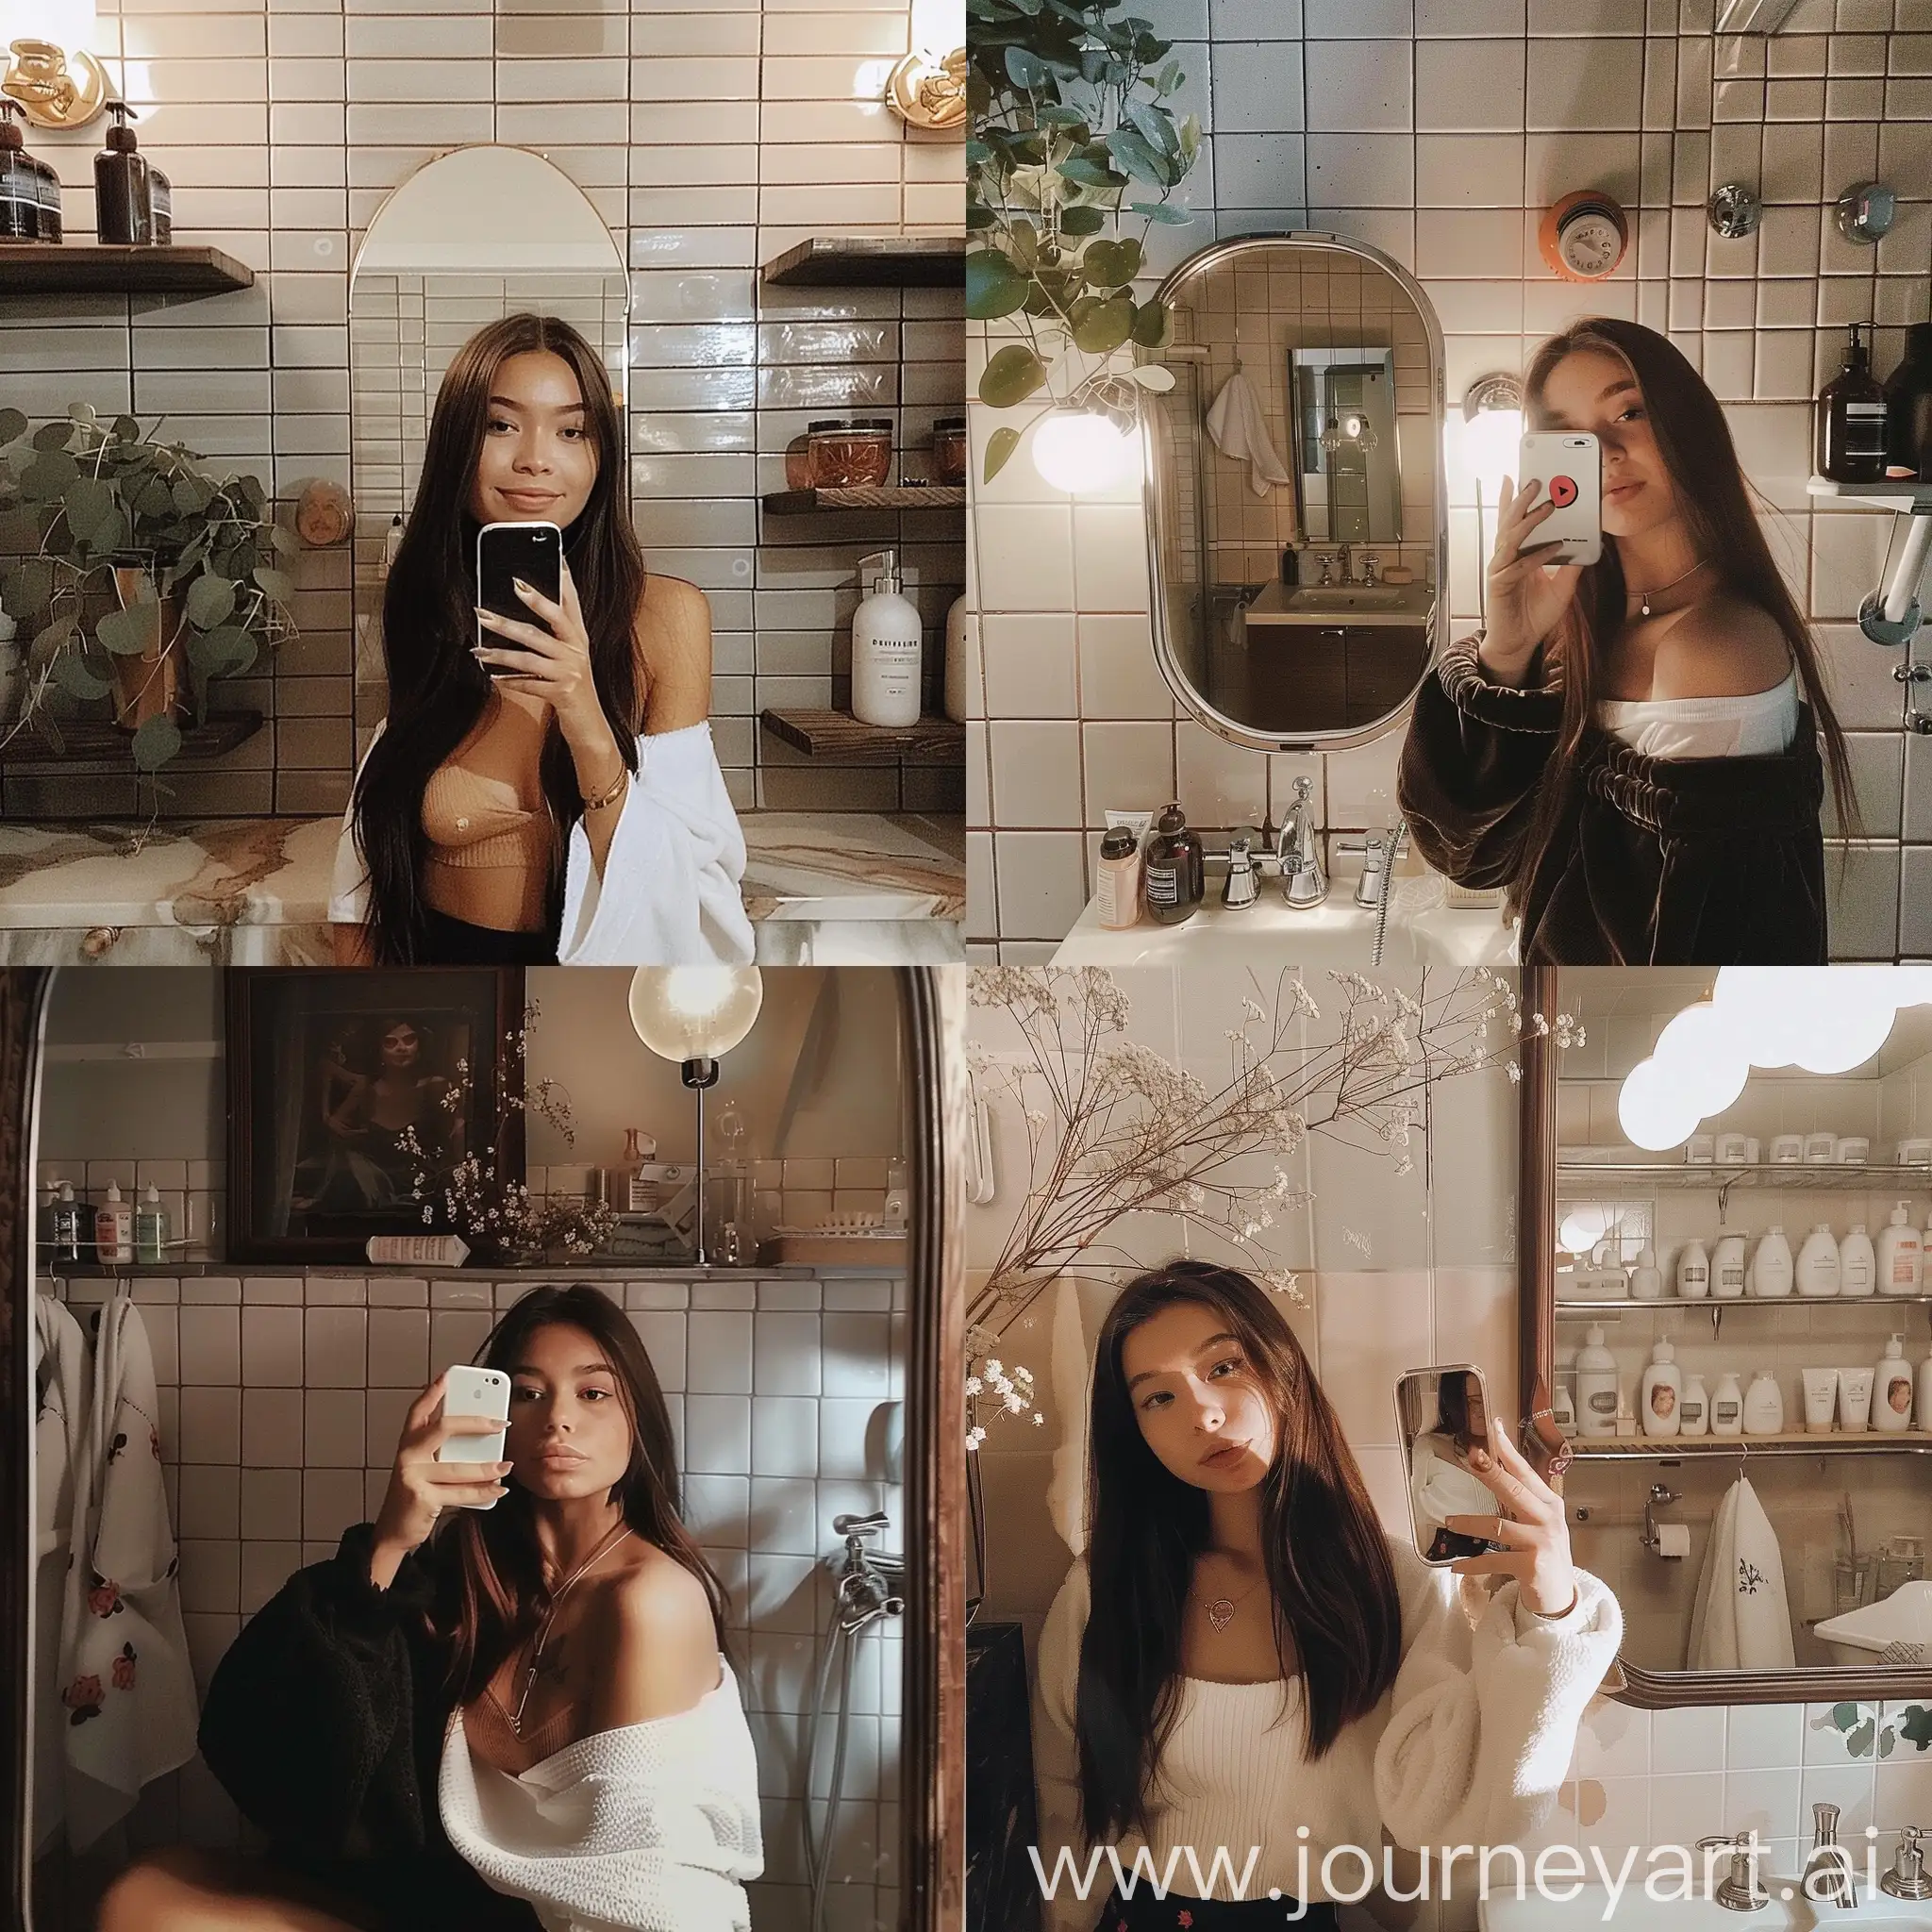 Aesthetic Instagram mirror selfie of a girl in her bathroom